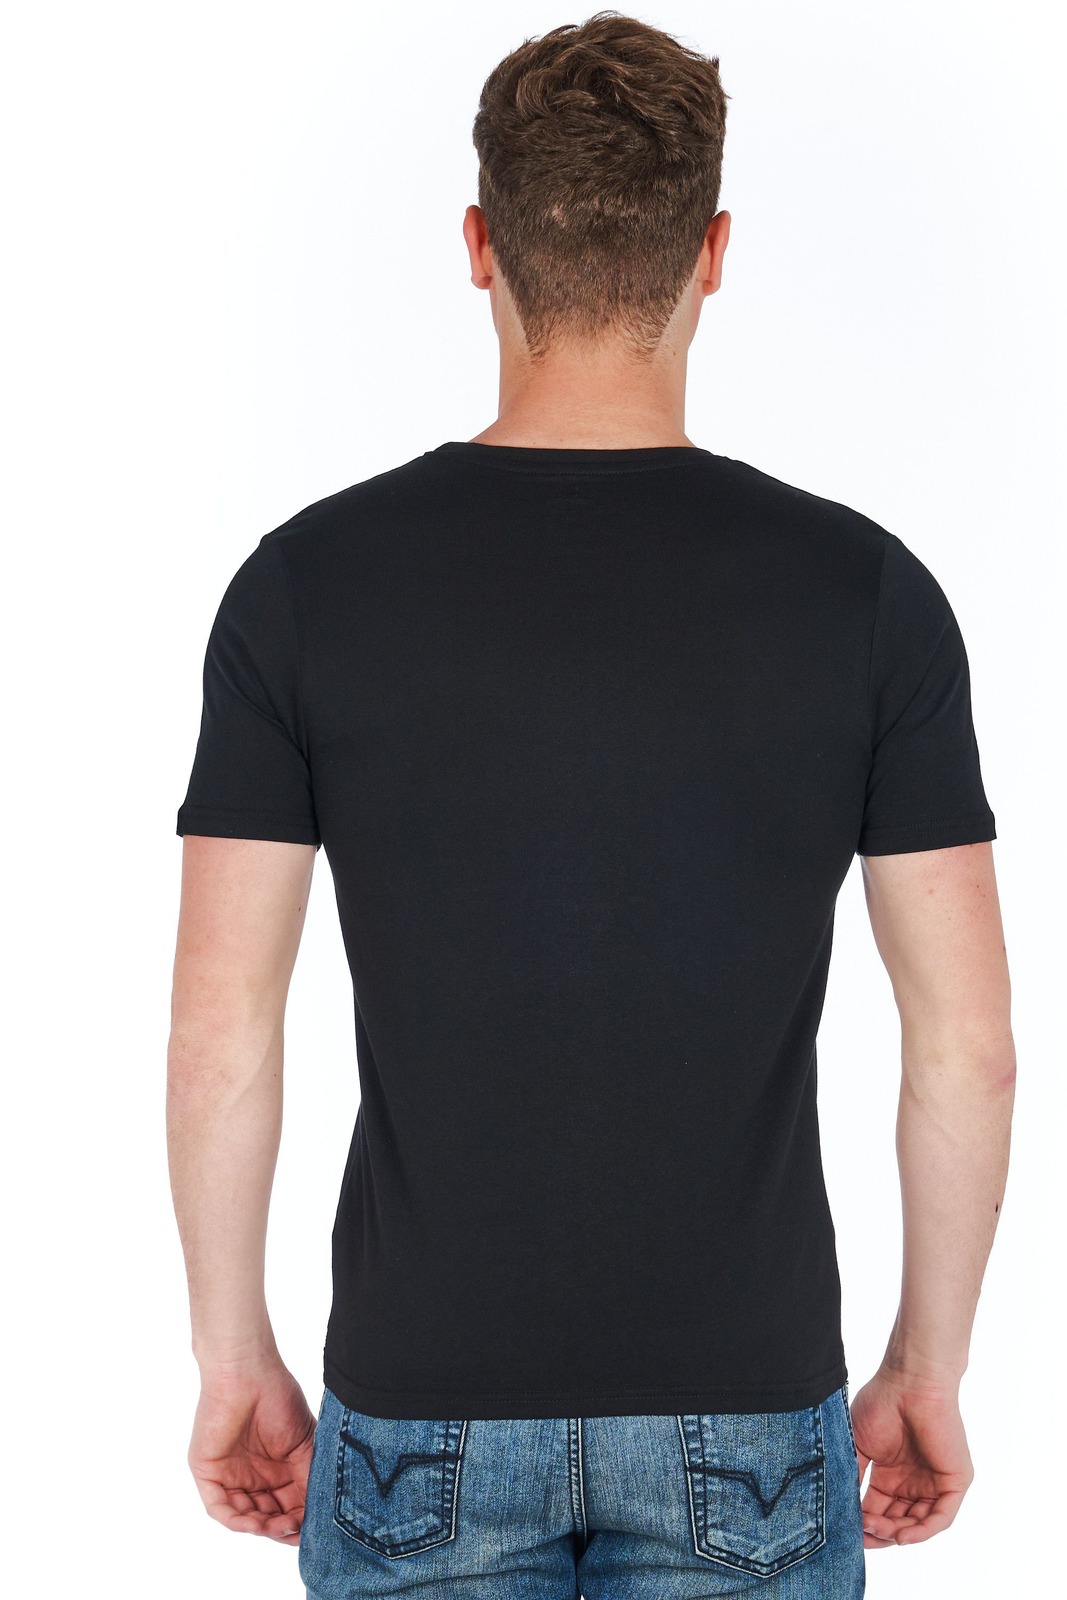 Jeckerson Black T-shirts for Men - ORDINARY